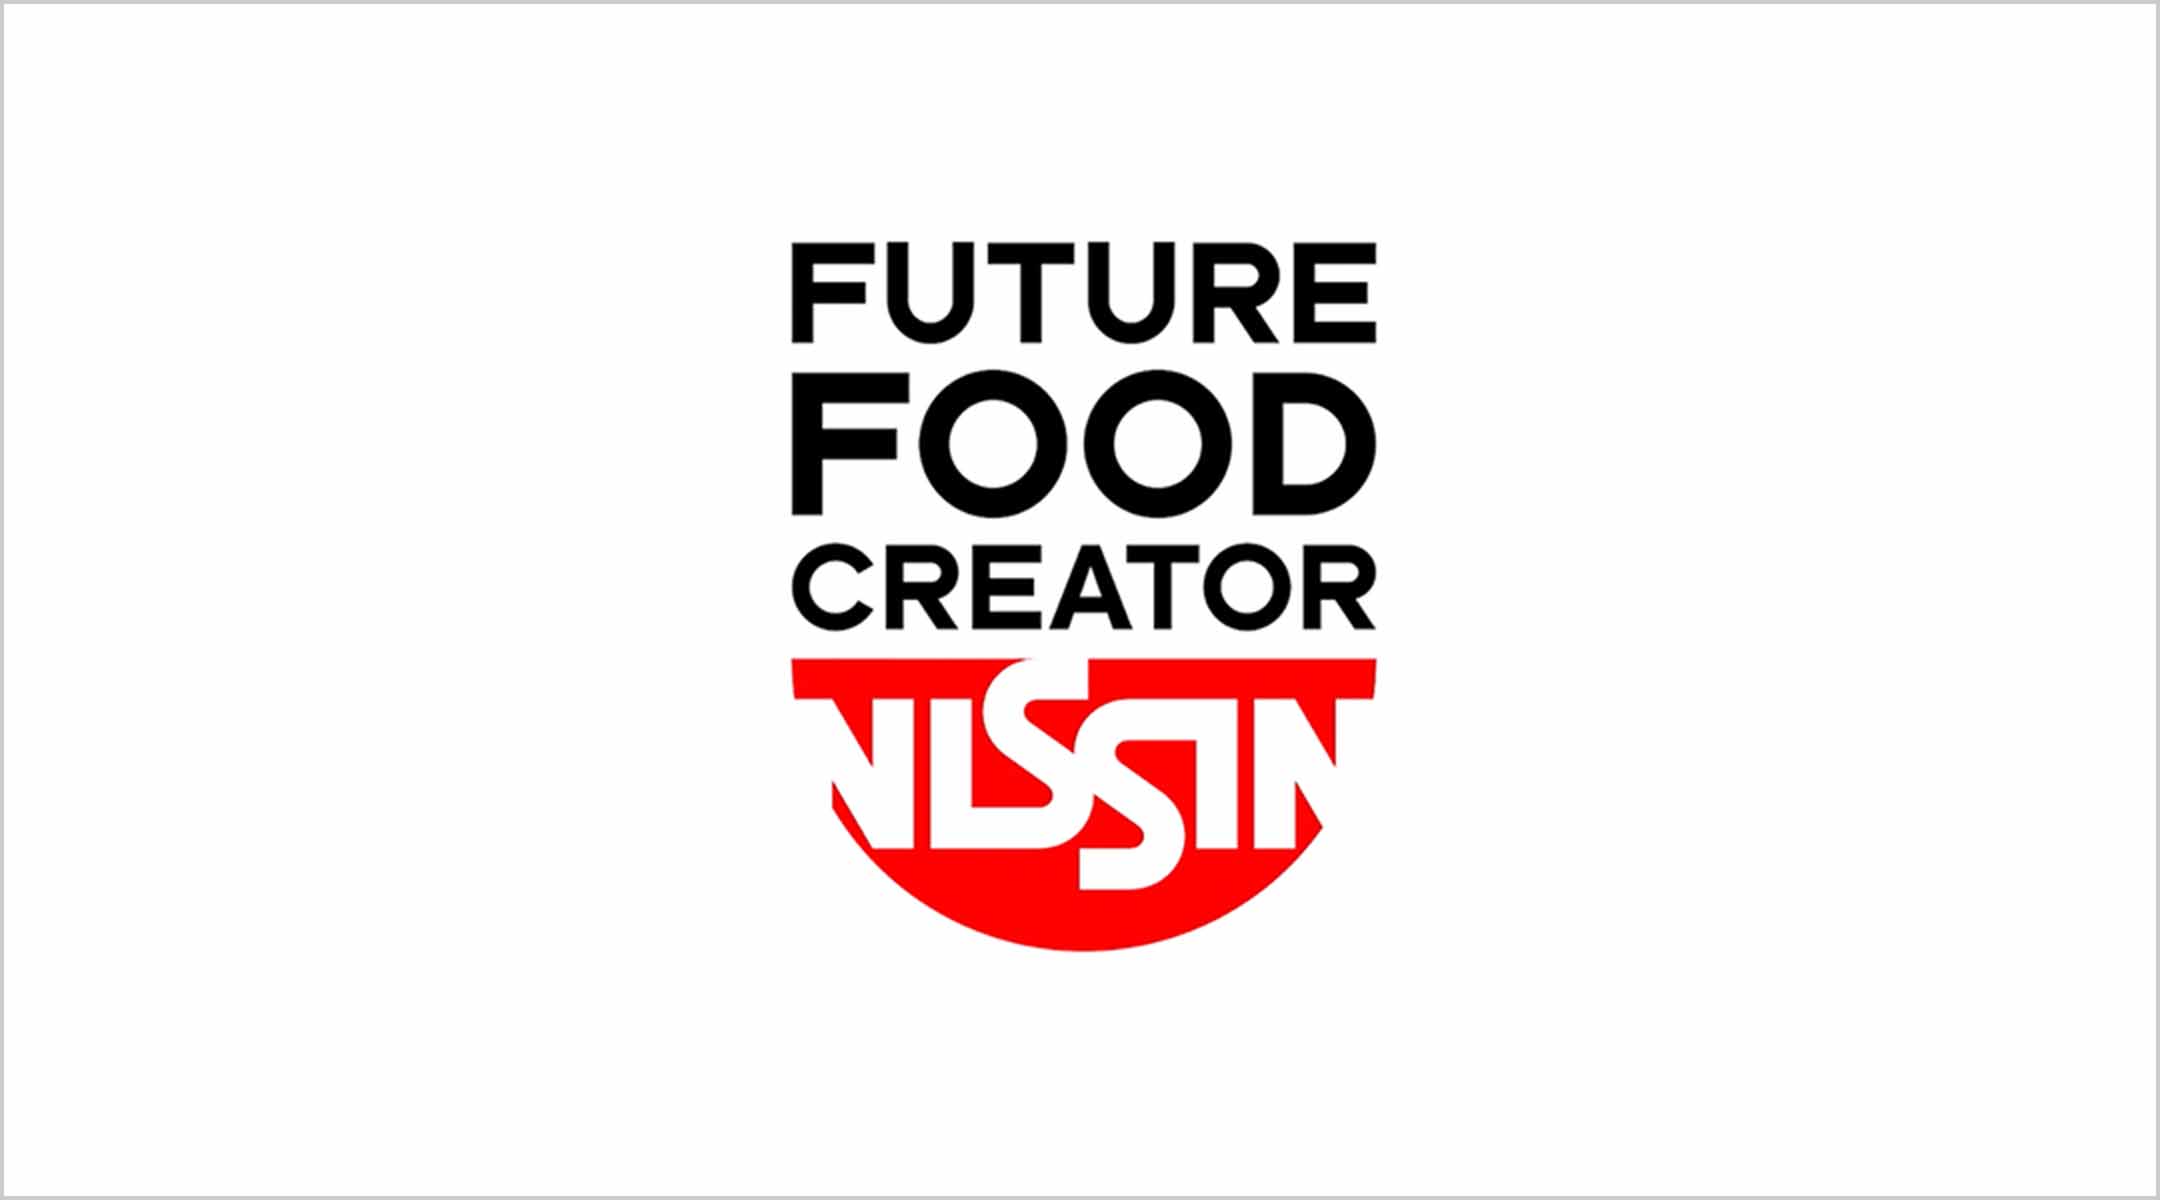 FUTURE FOOD CREATOR